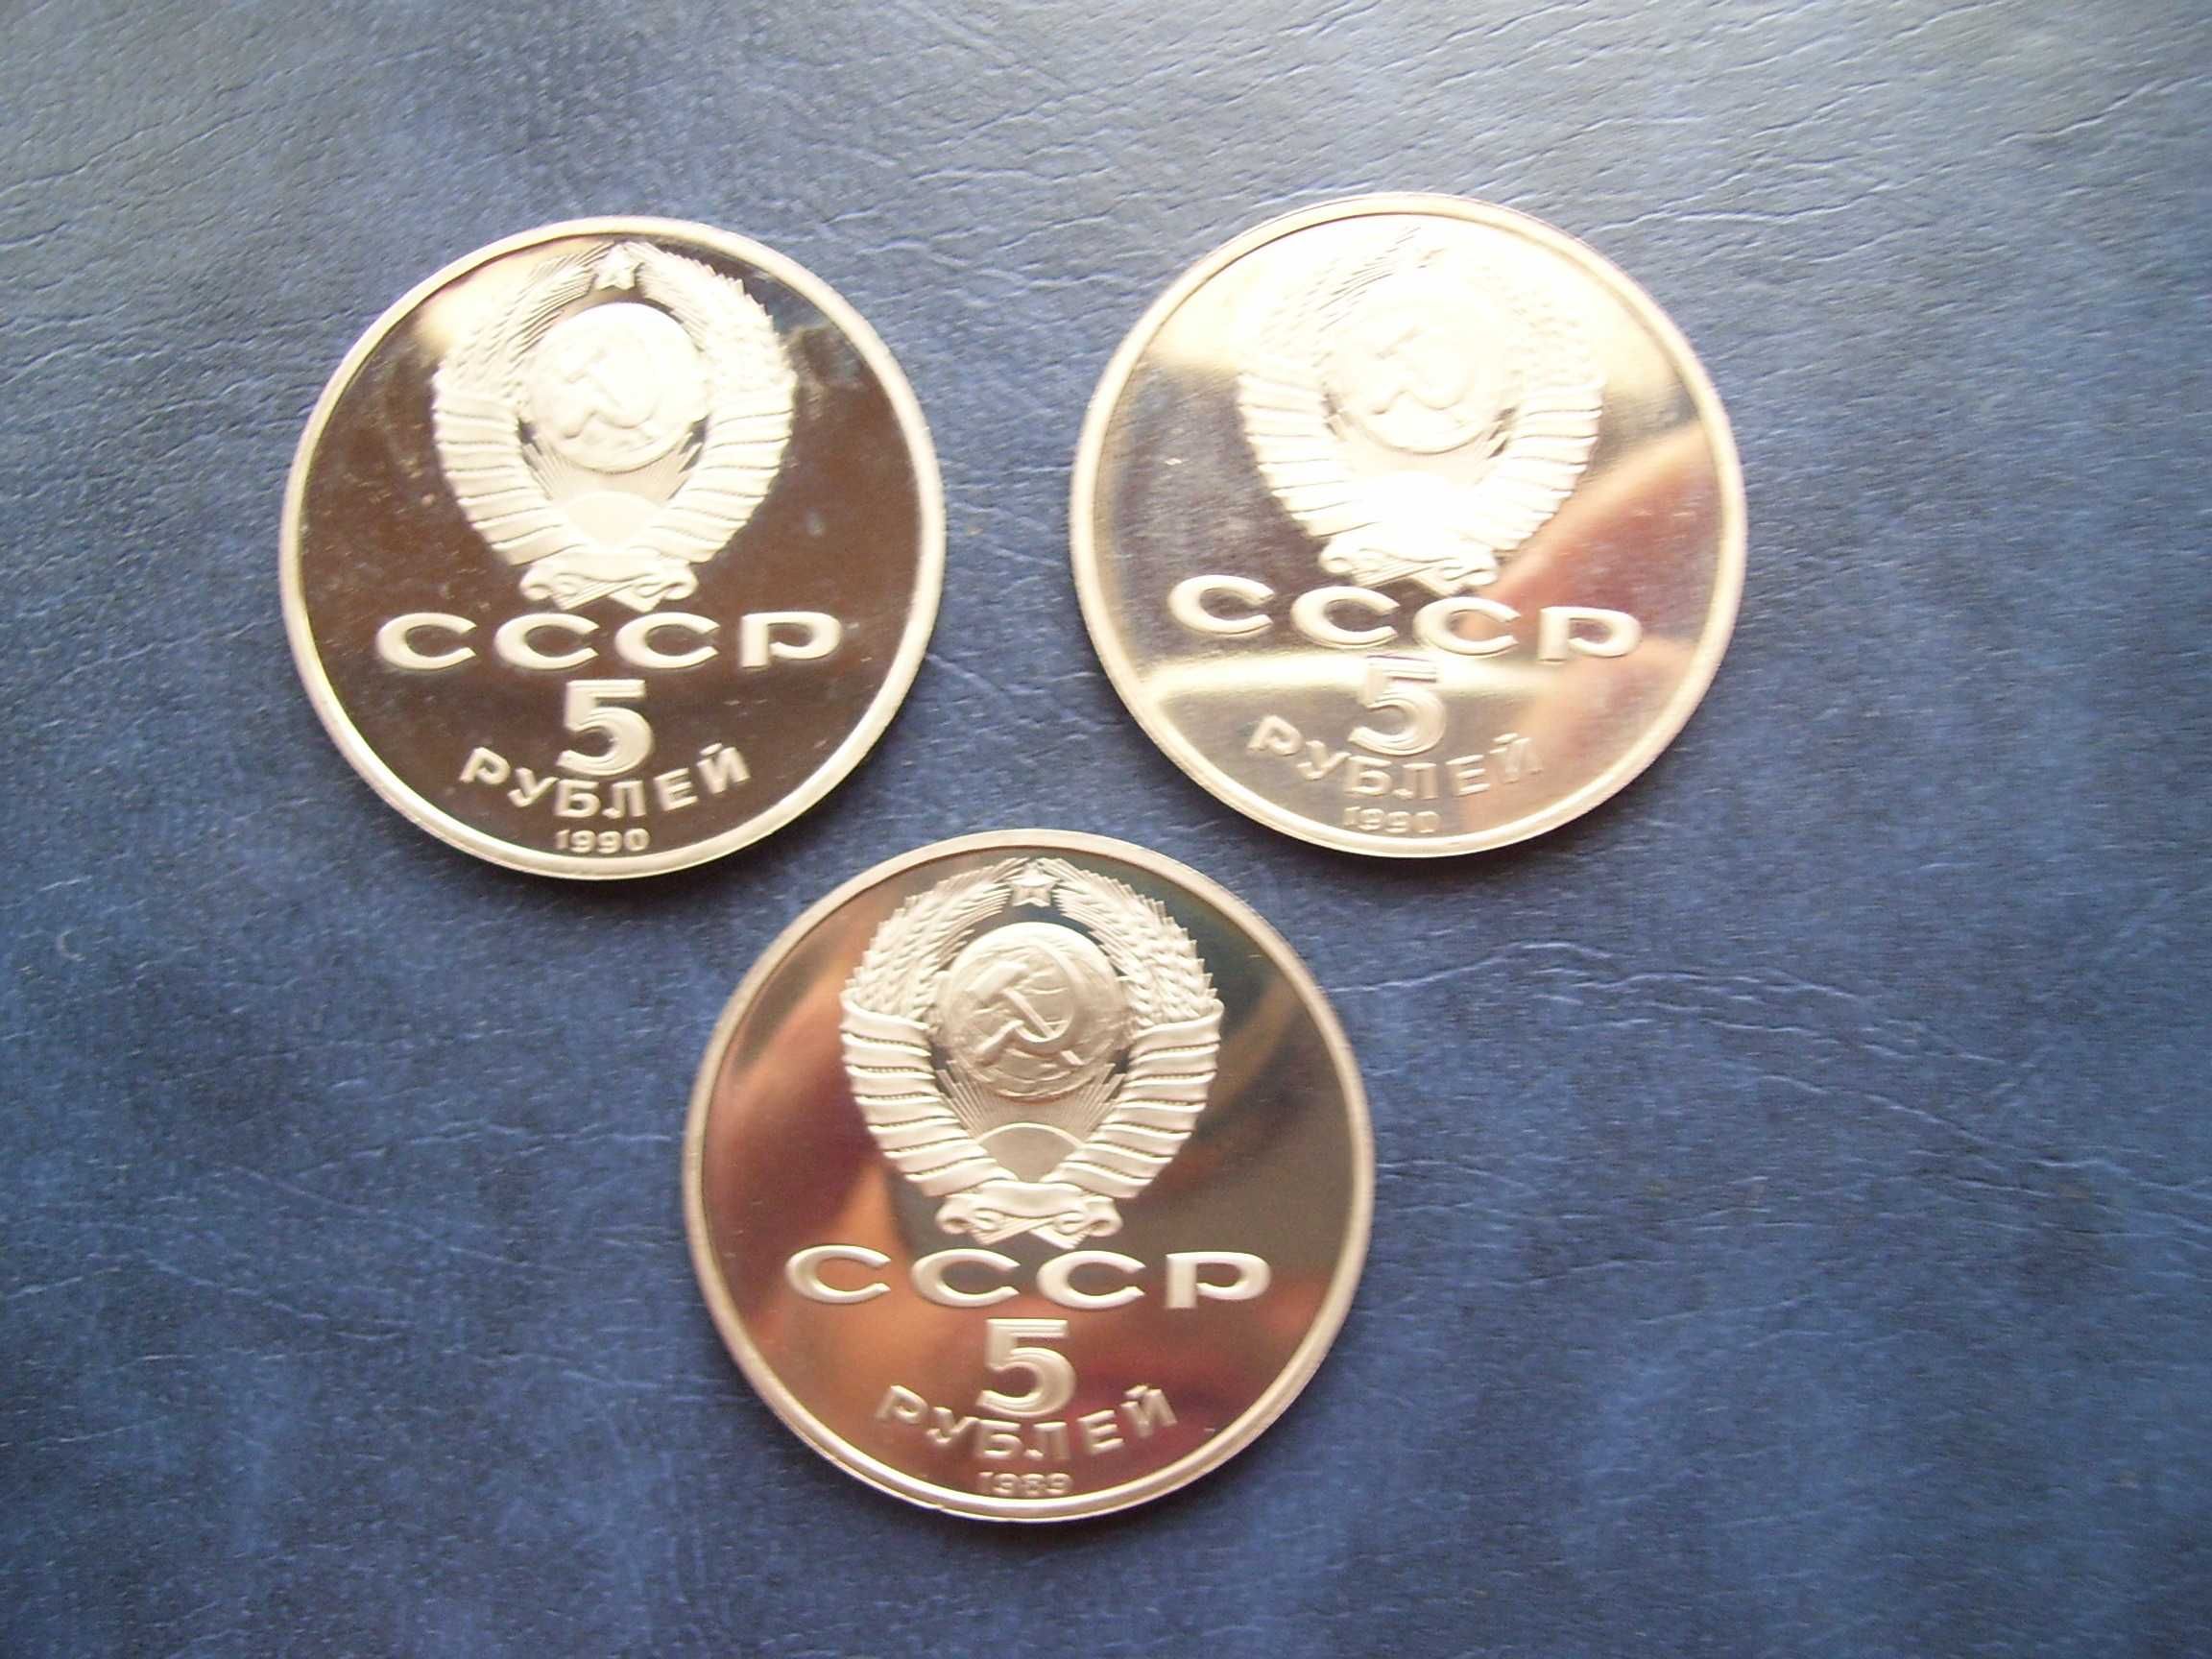 Stare monety 5 rubli 1989 , 1990  lustrzanki 3 monety PIękne Rosja